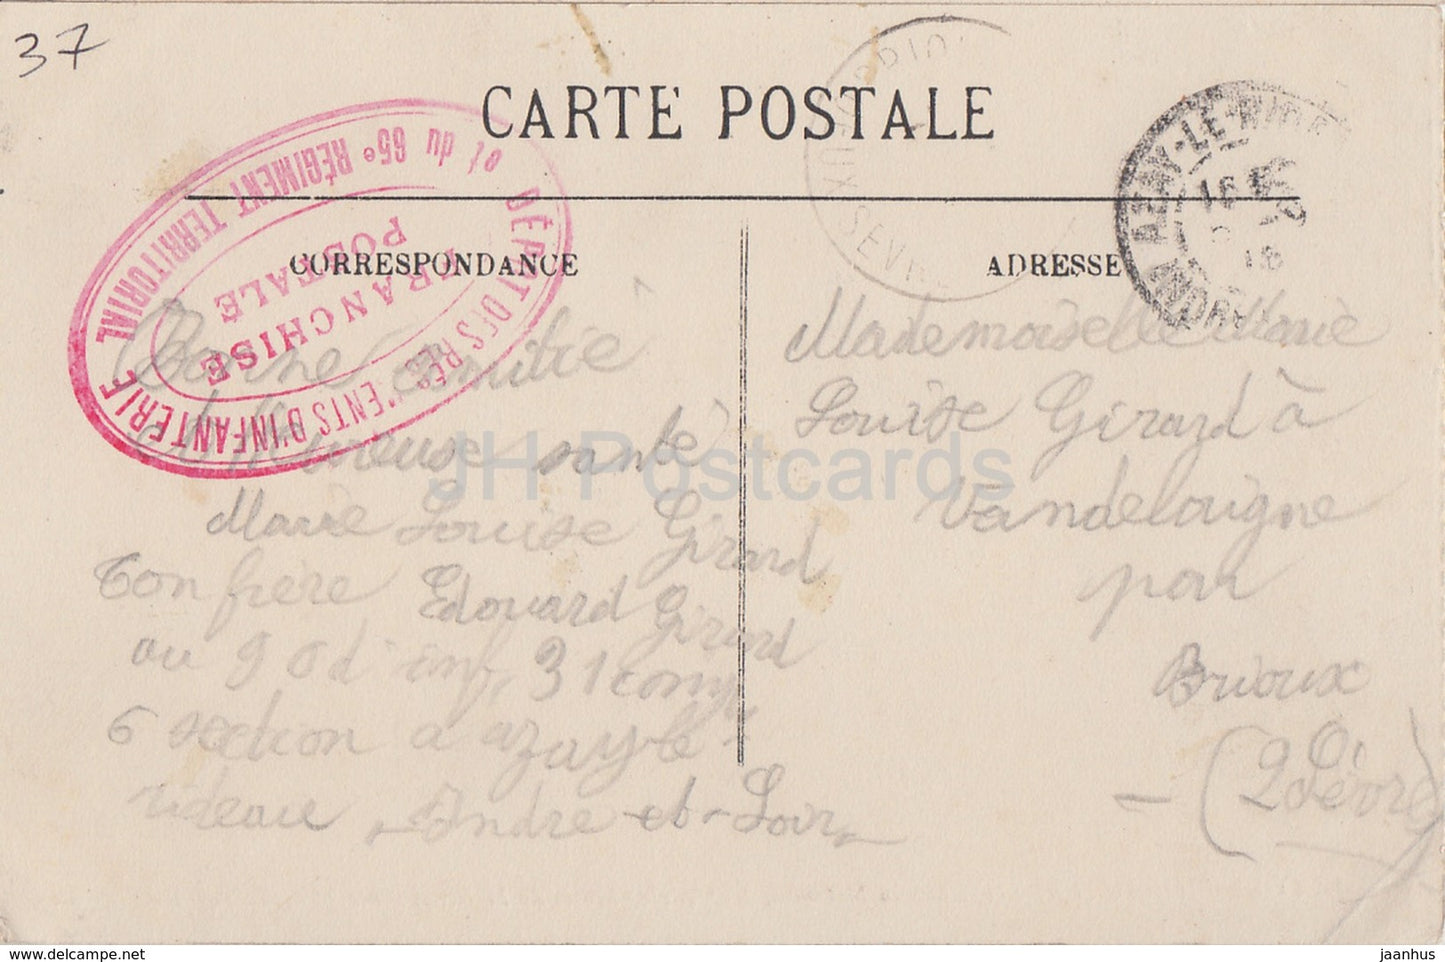 Azay Le Rideau - Chateau National - Facade Sud Est - Franchise Postale - Regiment - 9 - old postcard - France - used